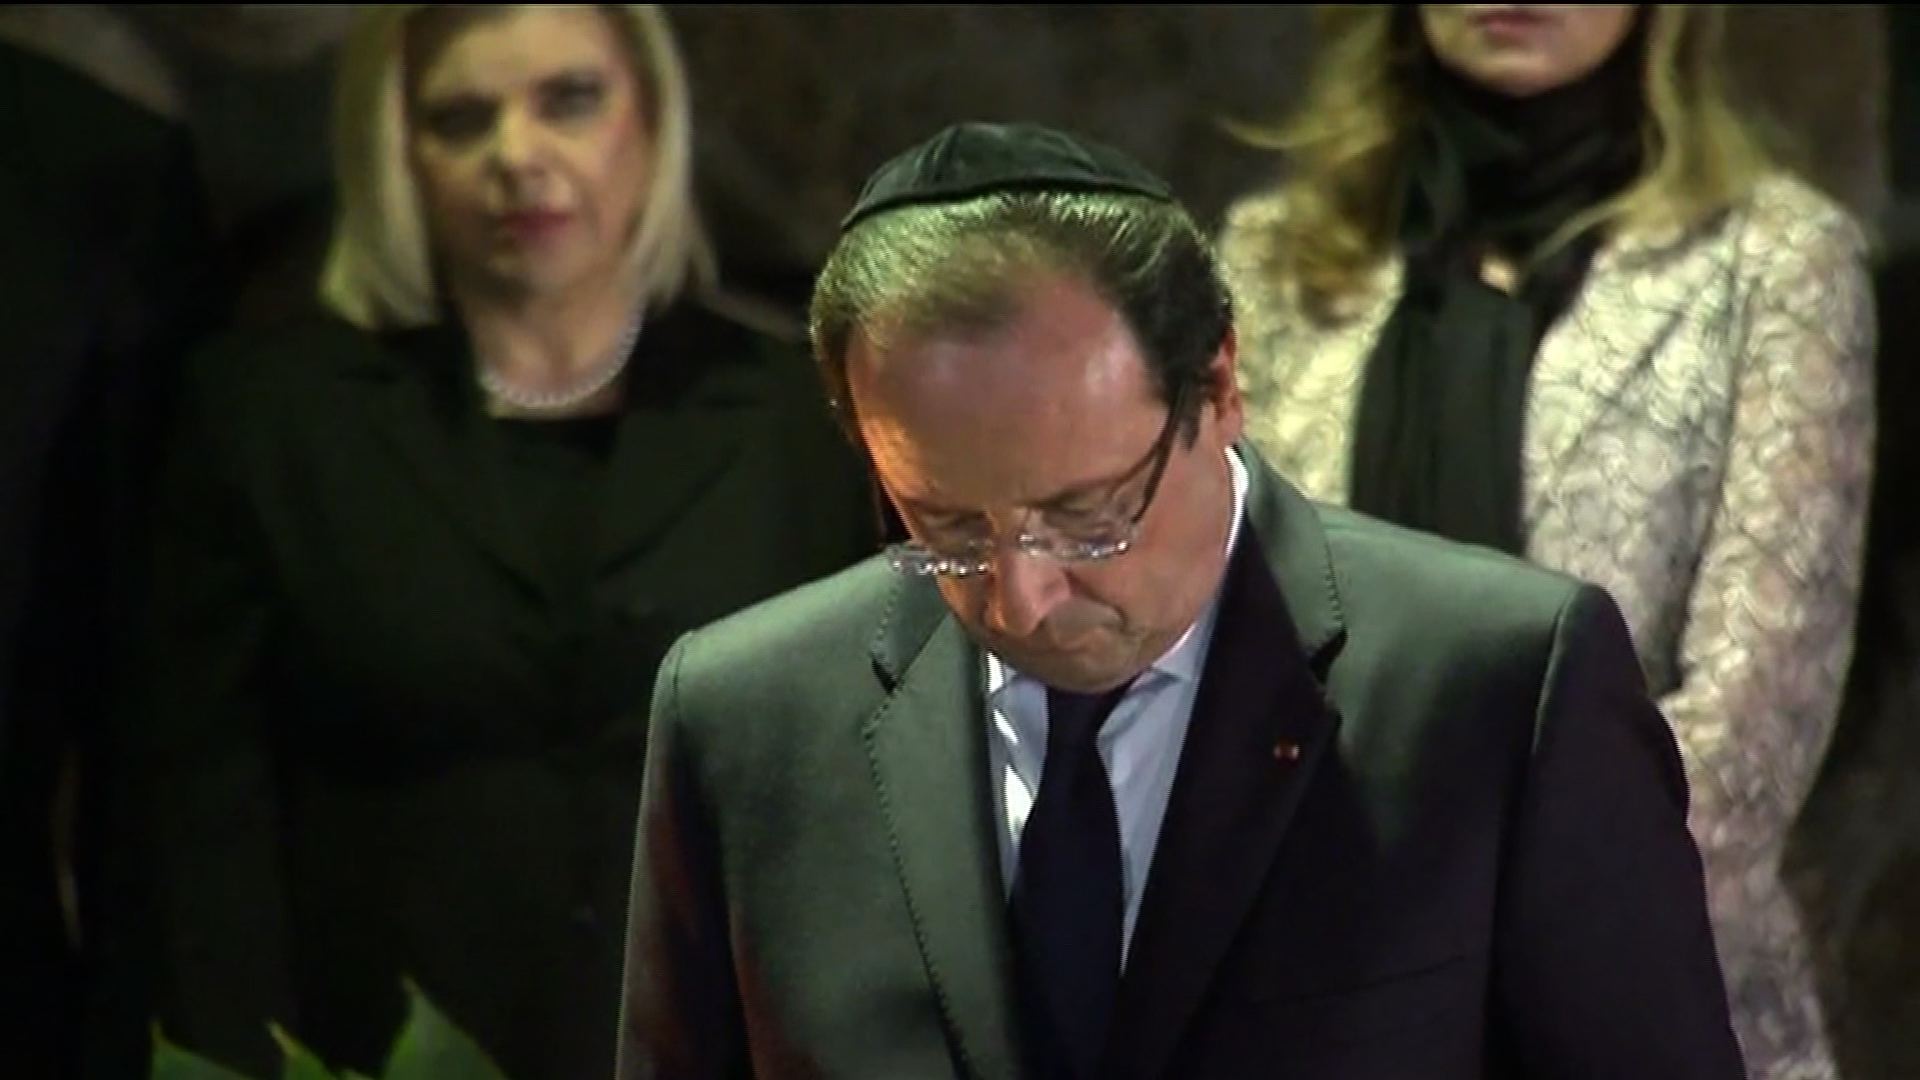 Jérusalem : Hollande aligne la France sur l’ONU